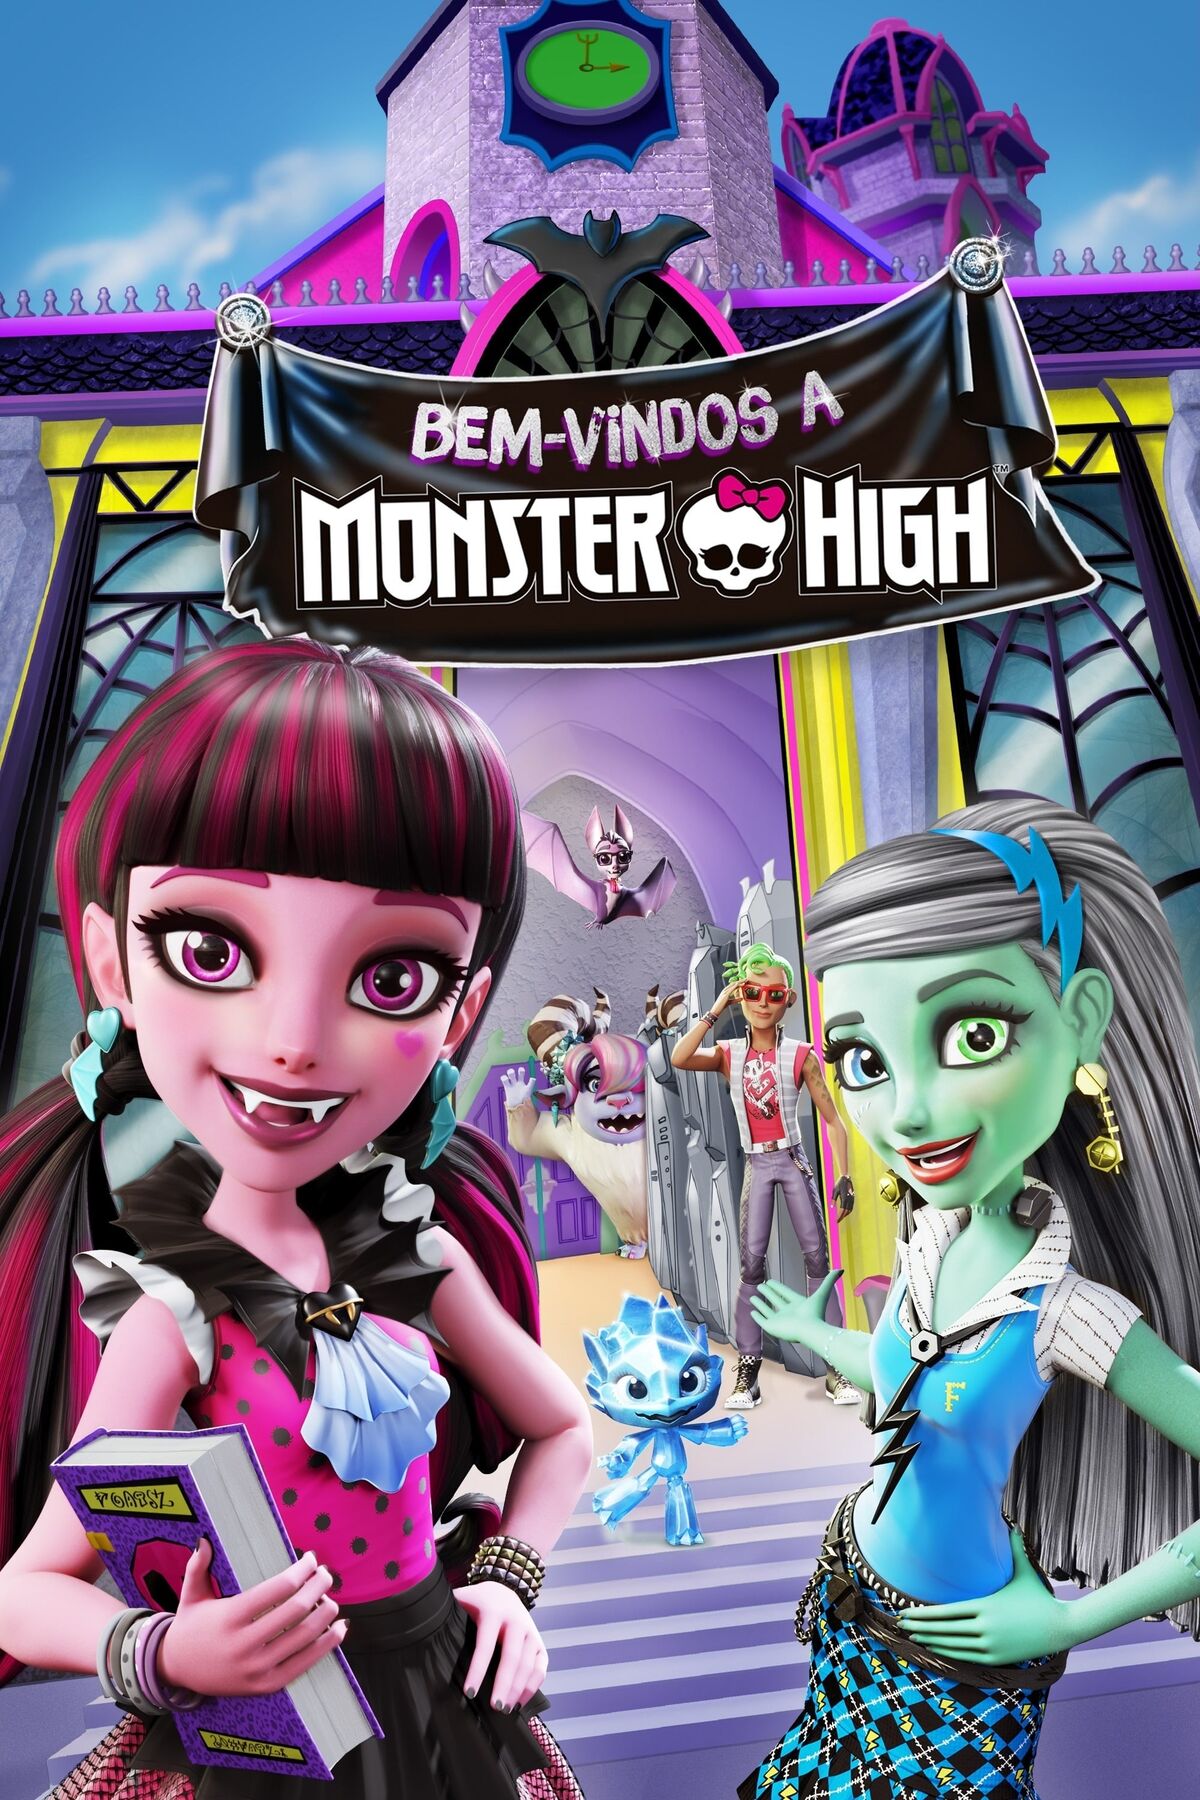 Monster High: The Movie filme - Onde assistir